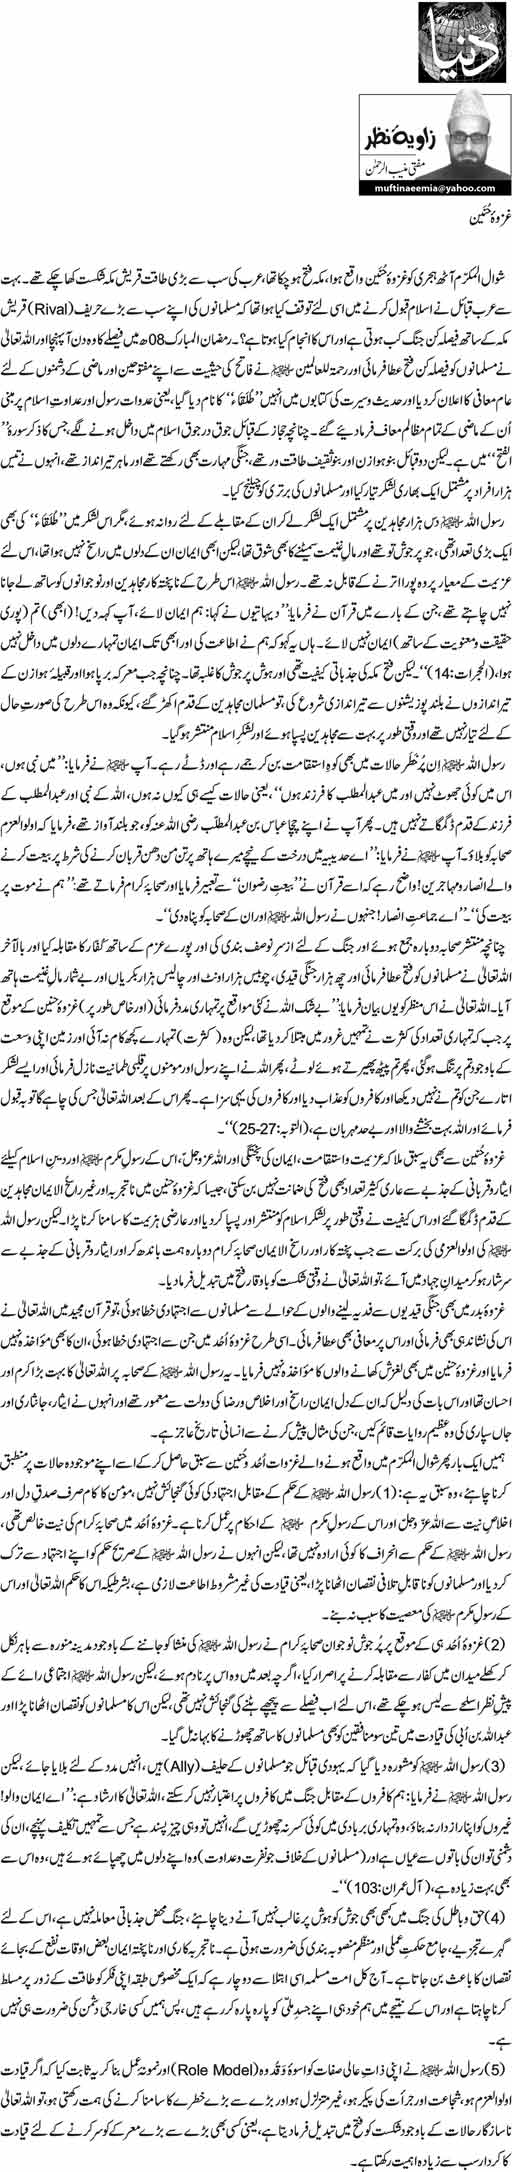 Ghazwa Hunain | Mufti Muneeb Ur Rehman | Daily Urdu Columns